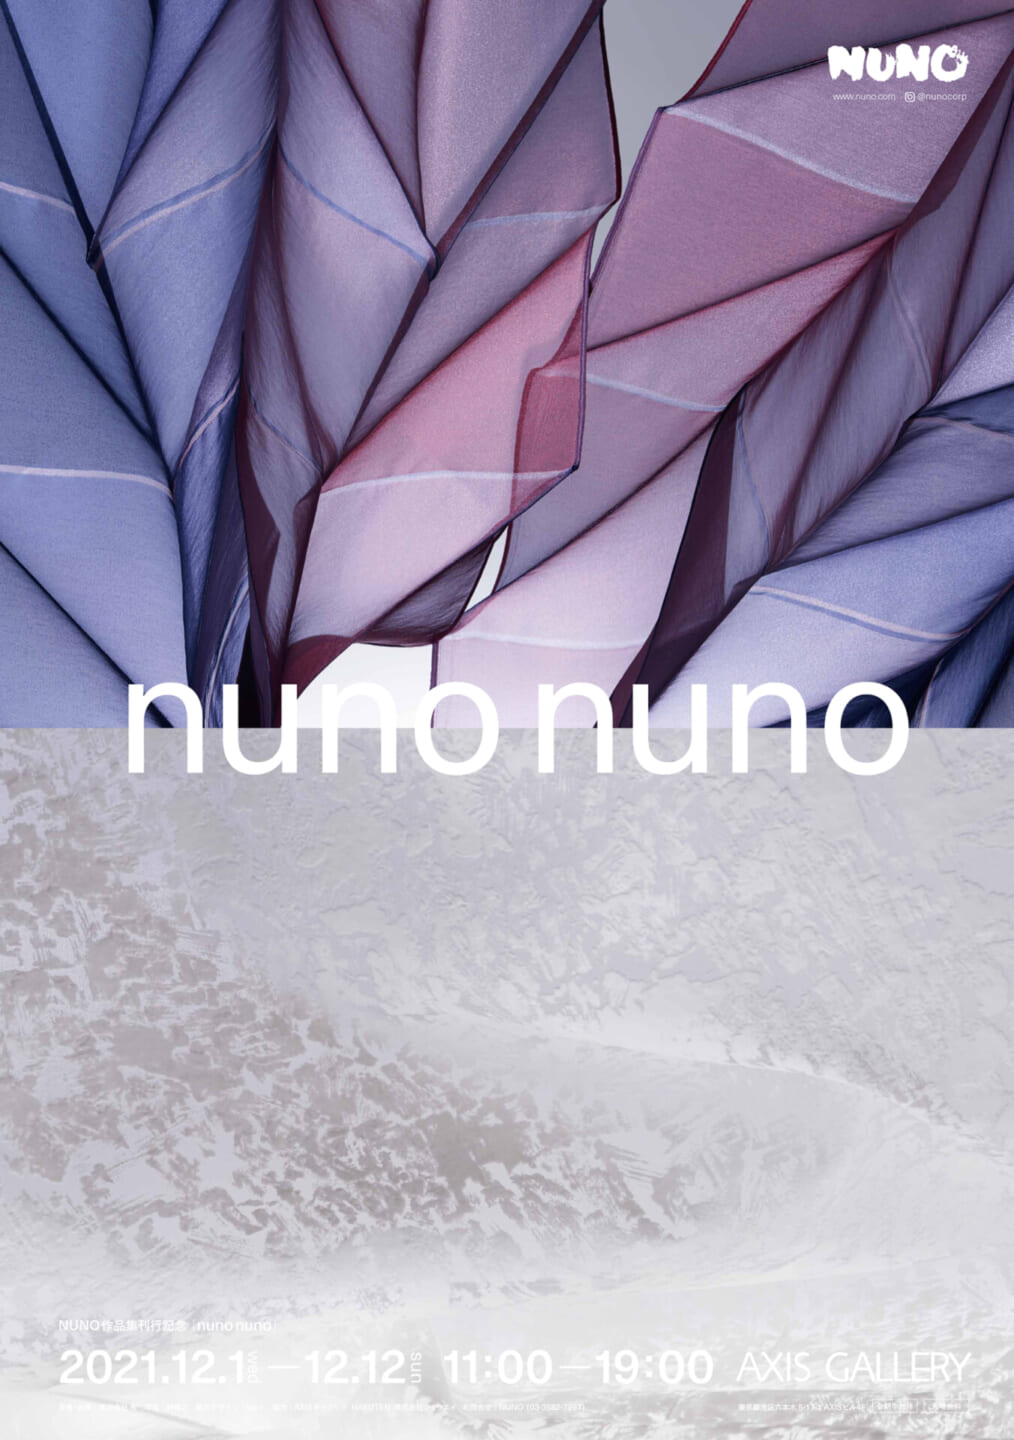 NUNO-Visionary Japanese Textiles 刊行記念<br/>「nuno nuno」展